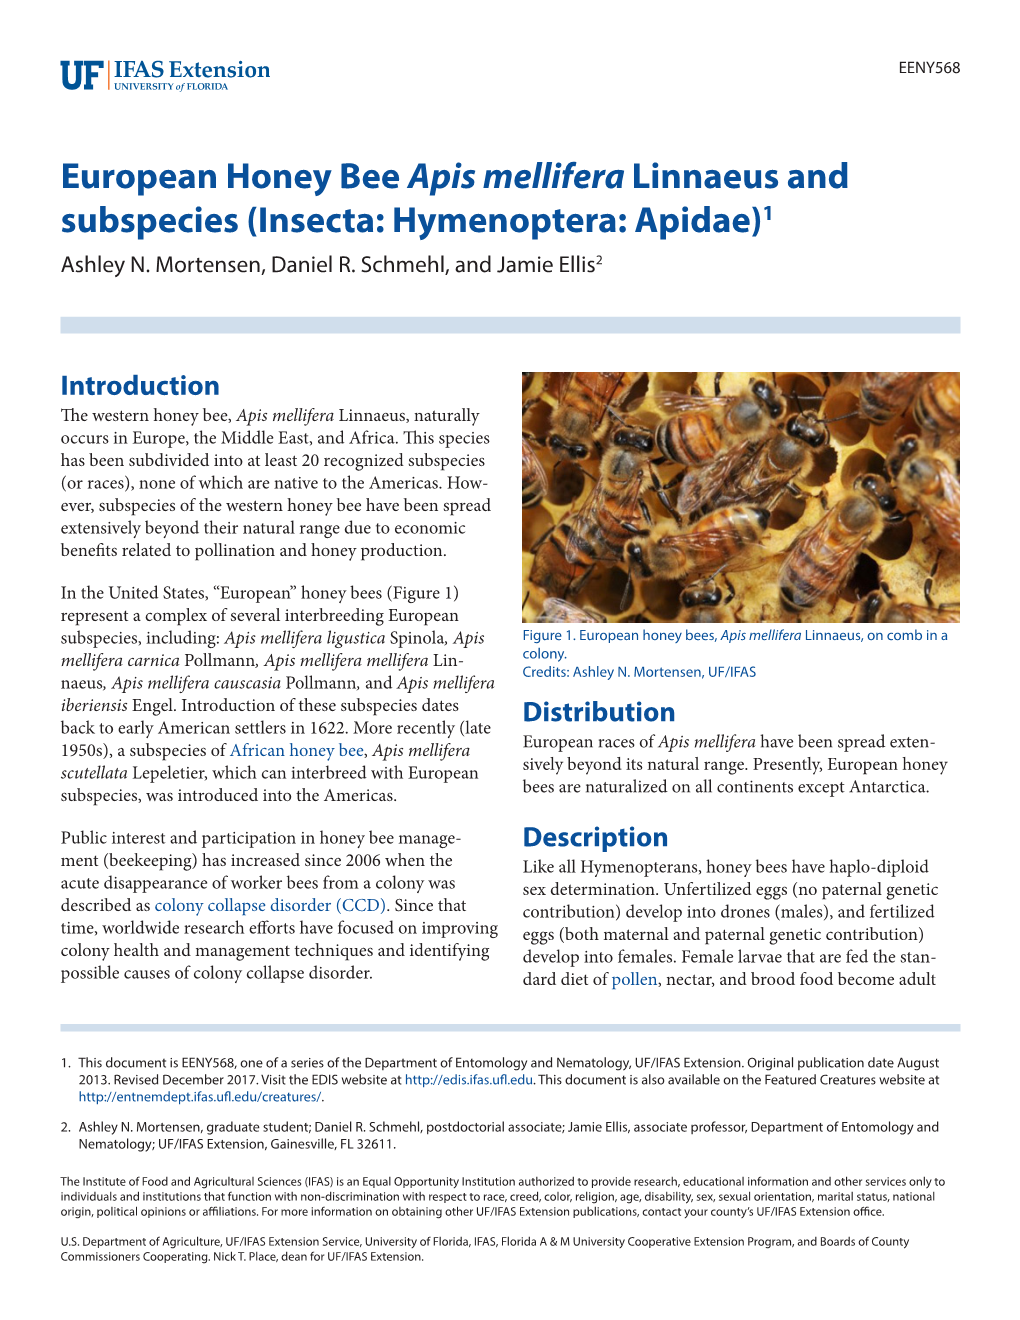 European Honey Bee Apis Mellifera Linnaeus and Subspecies (Insecta: Hymenoptera: Apidae)1 Ashley N